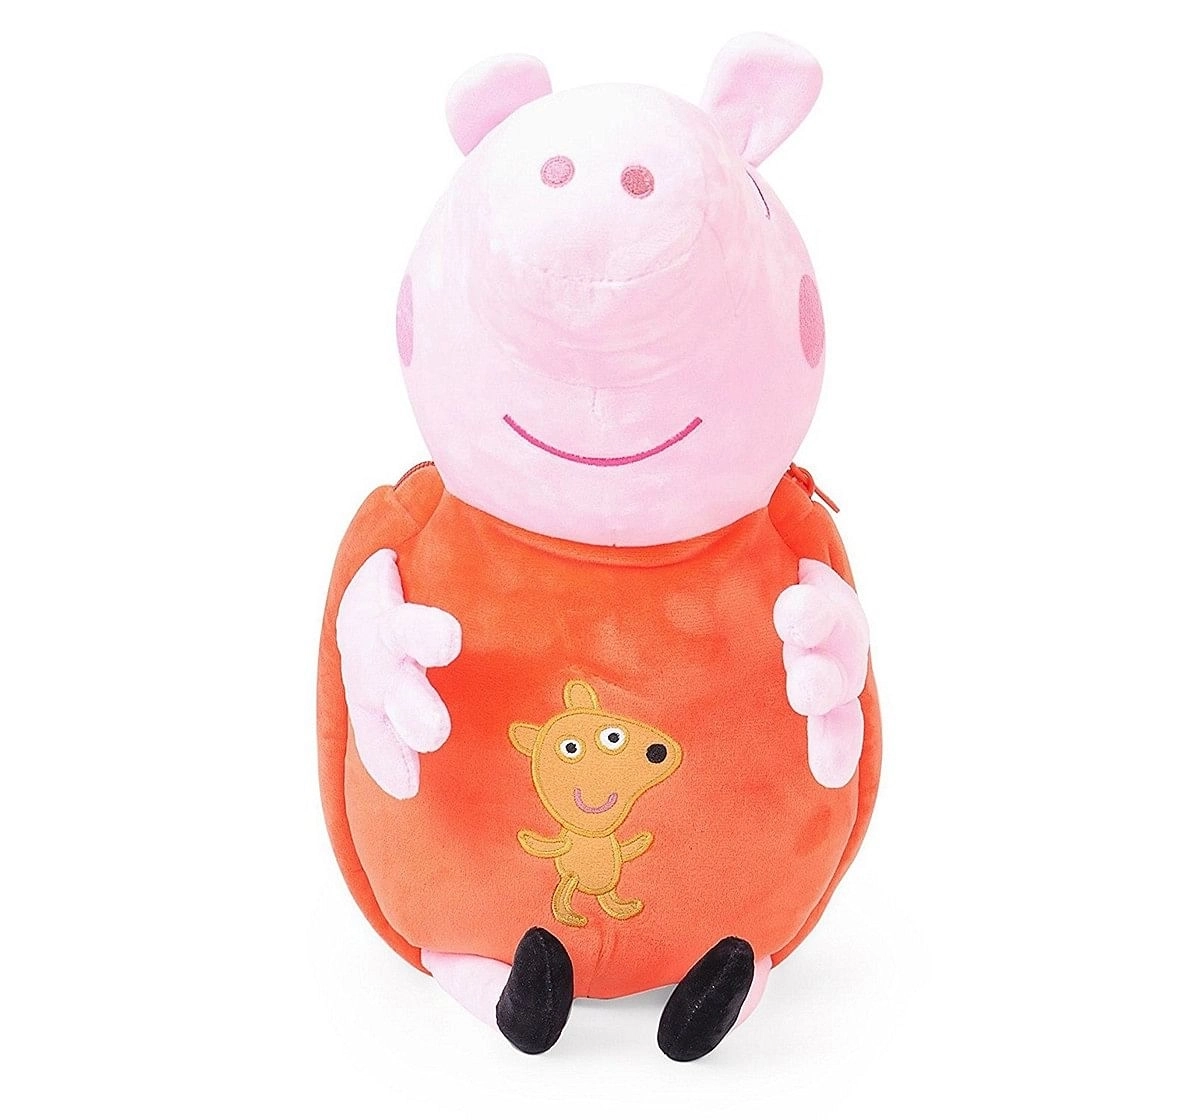 Peppa Pig Soft Toy Bag Multi Color 44 Cm for Kids age 2Y+ 